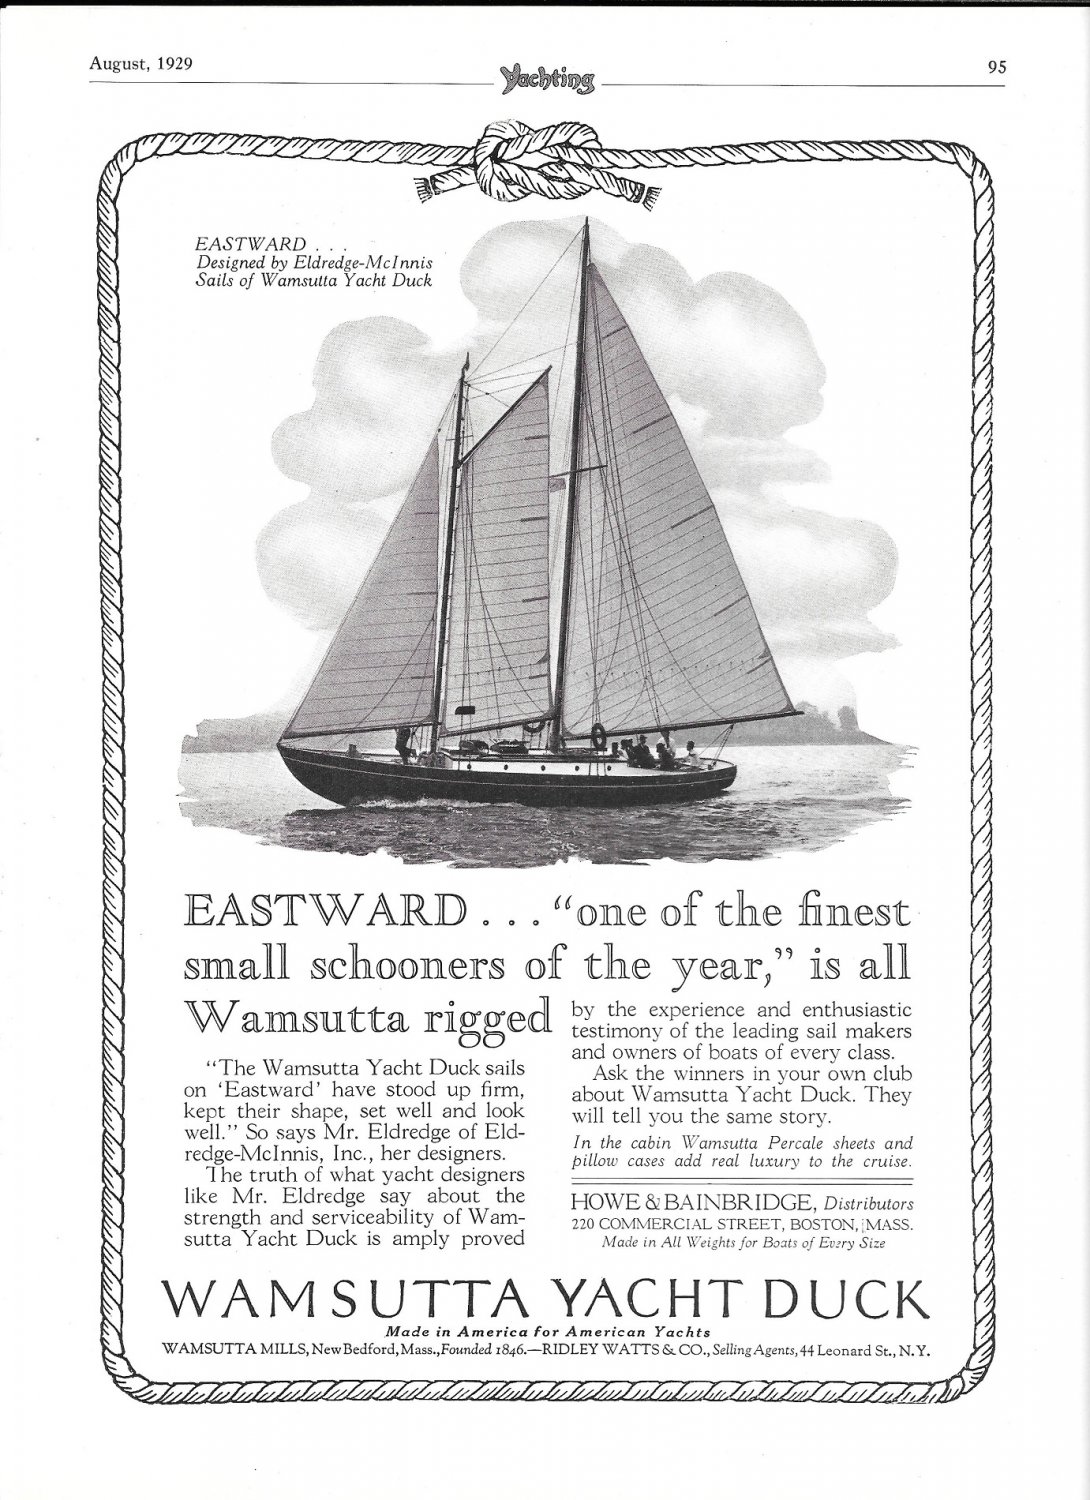 1929 Wamsutta Yacht Duck Ad- Nice Photo of the "Eastward"